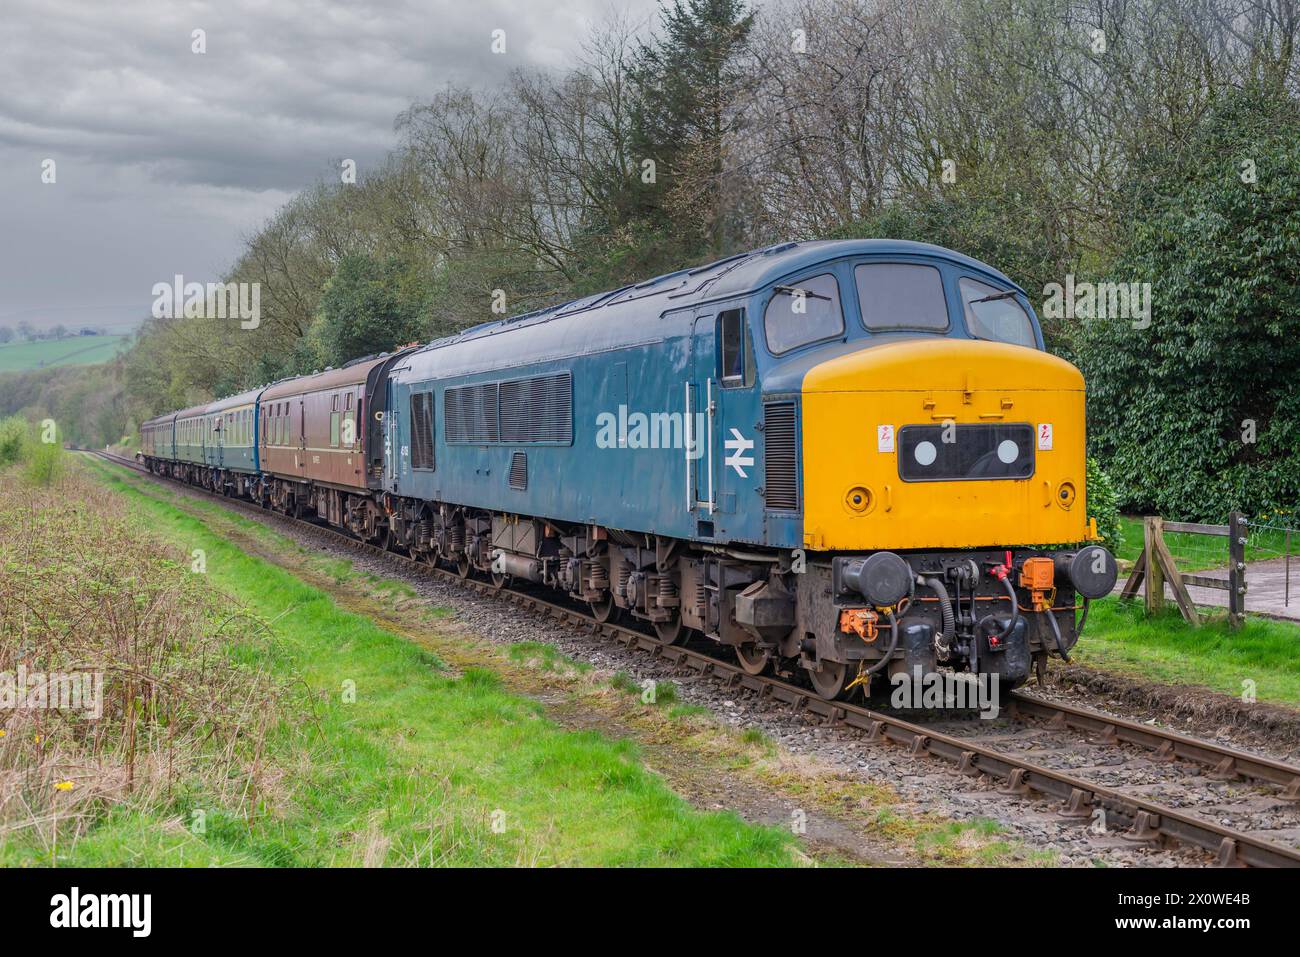 British Railways Class 45 45108 `Peak` Diesel Locomotive on the ELR East Lancashire Railway network Stock Photo